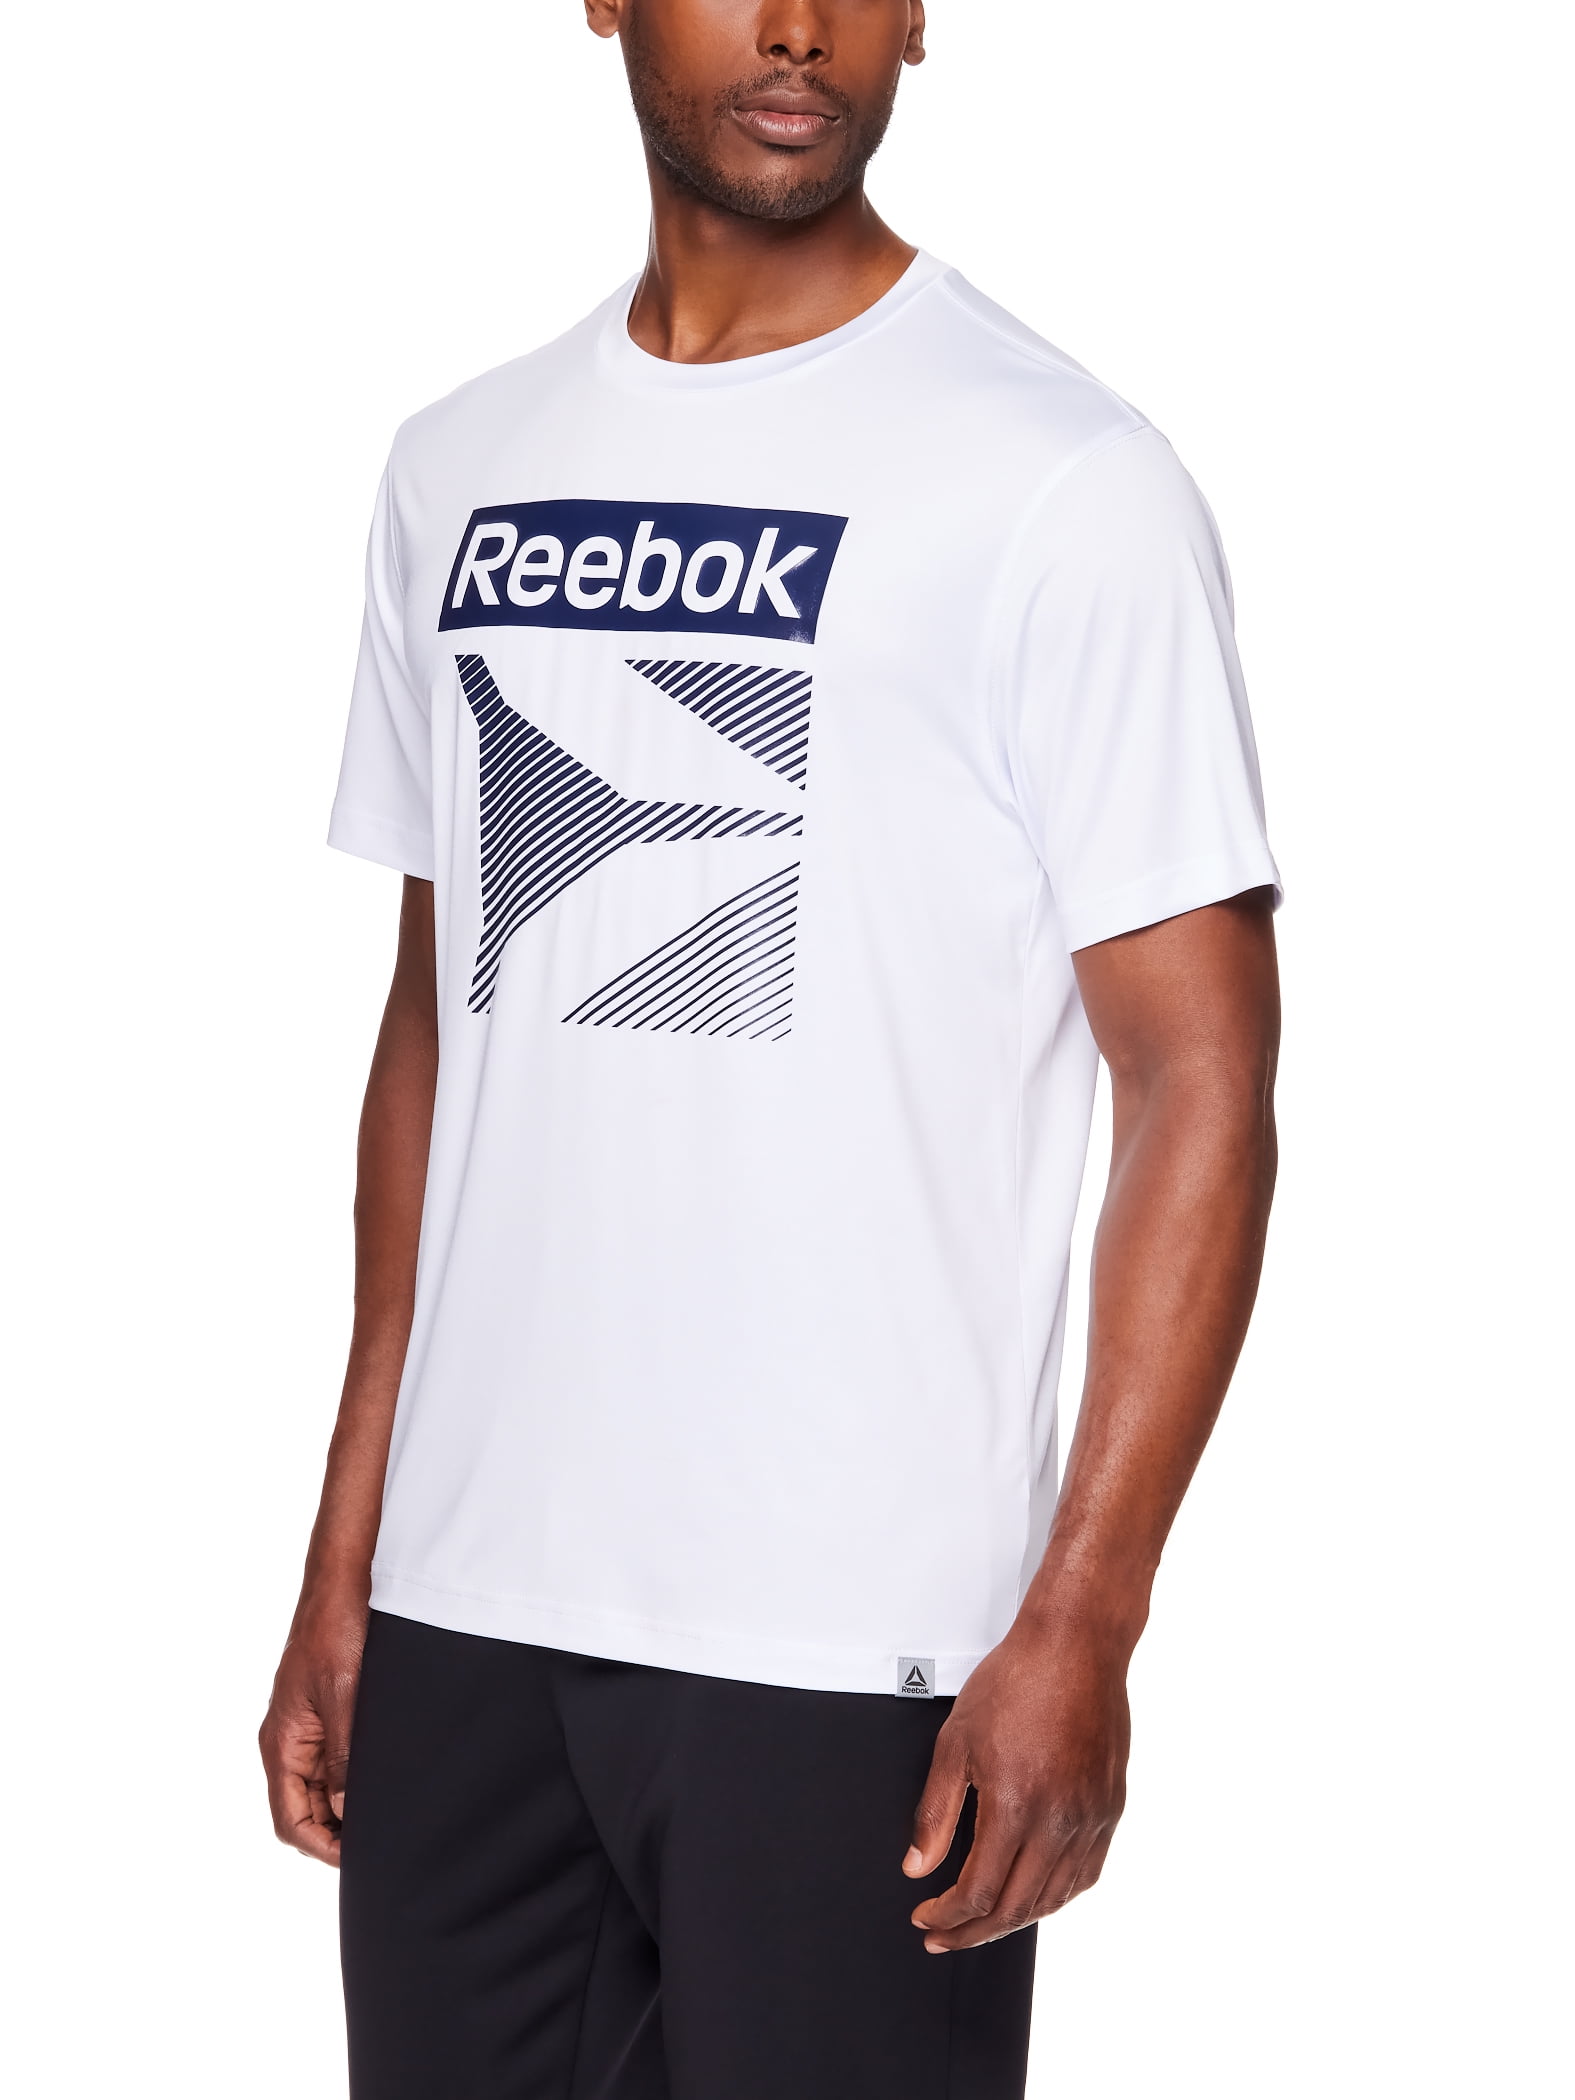 Reebok Men's Radiant Graphic T-Shirt